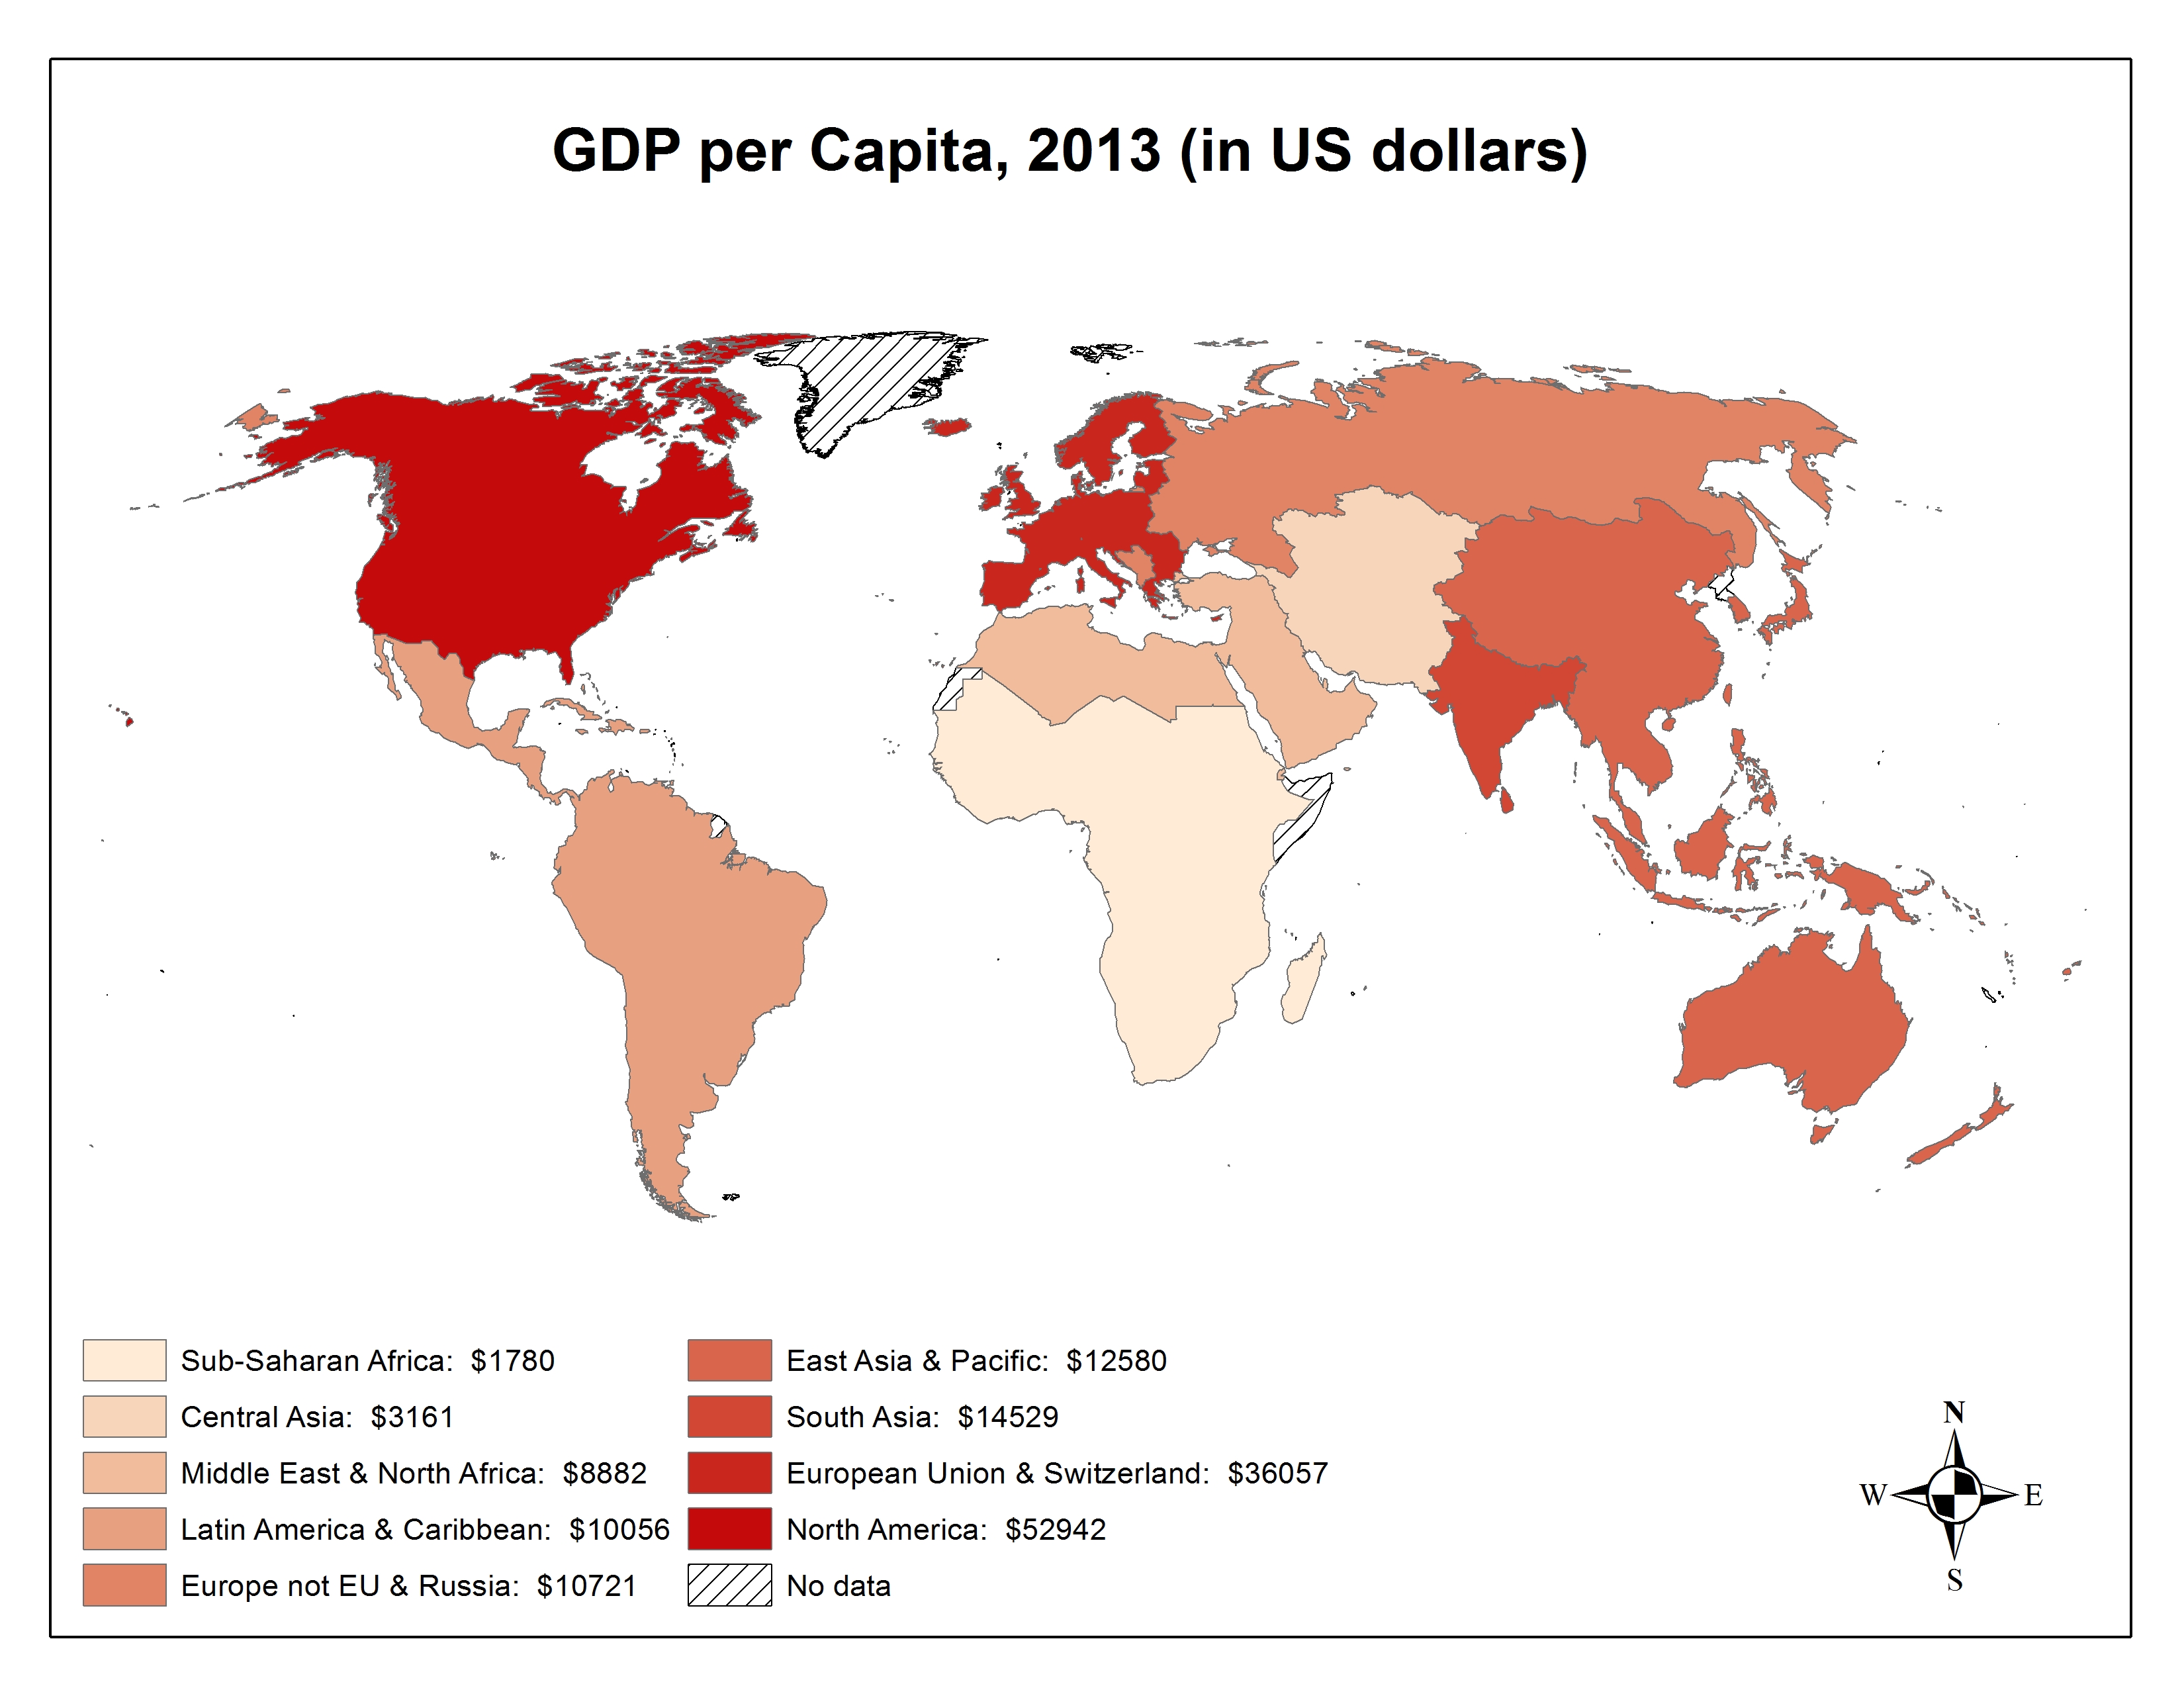 Image: GDP per Capita, 2013